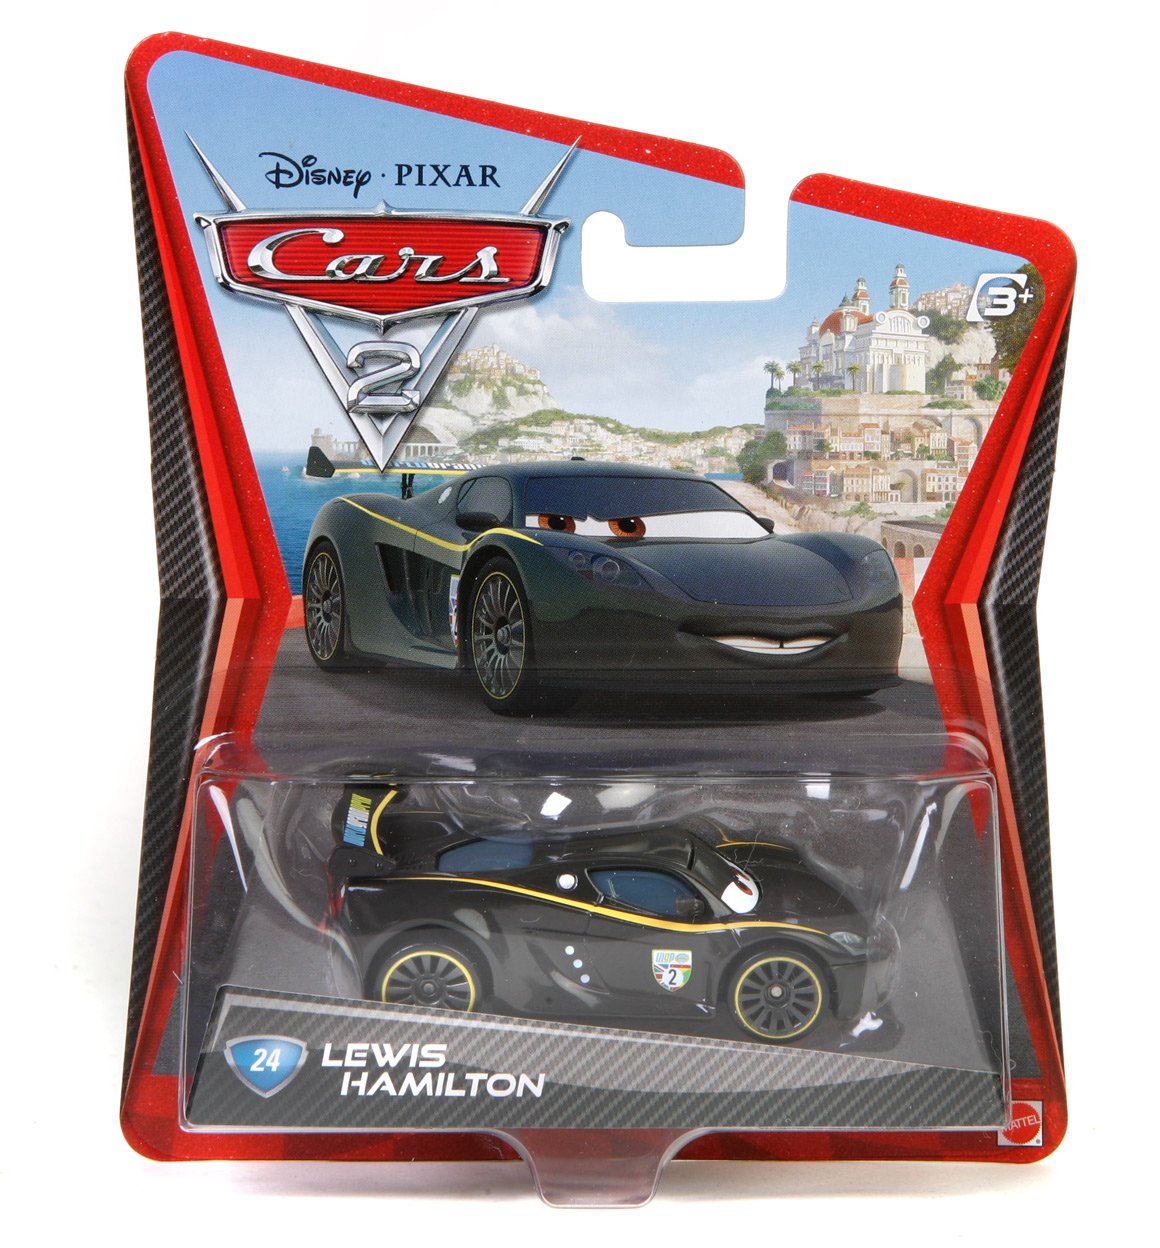 Disney/Pixar Cars 2 Movie Lewis Hamilton #24 1:55 Scale